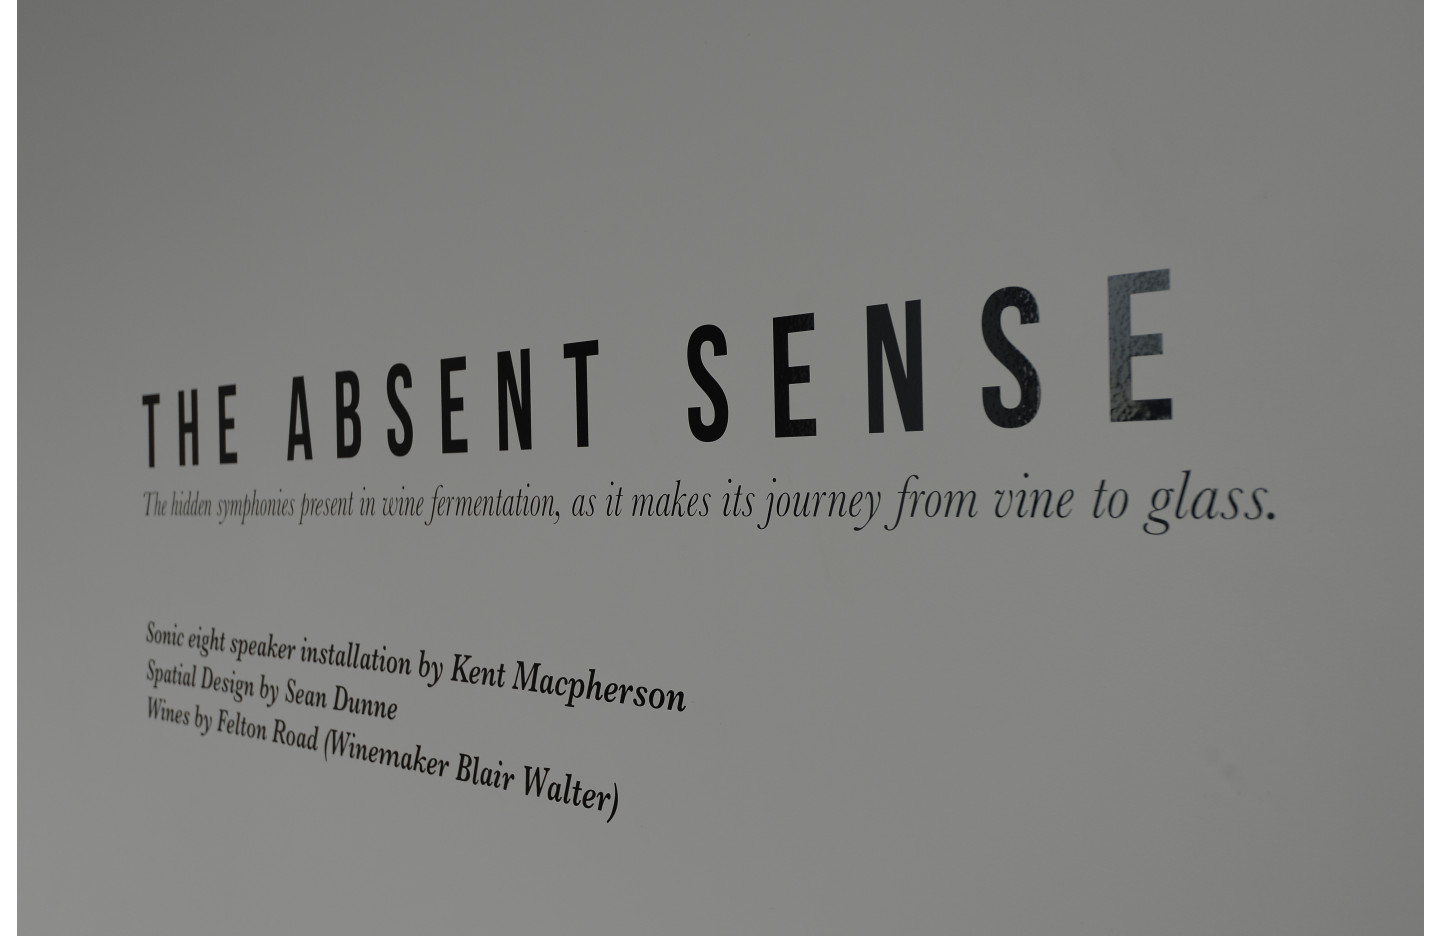 The Absent Sense, Ramp Gallery (2016)